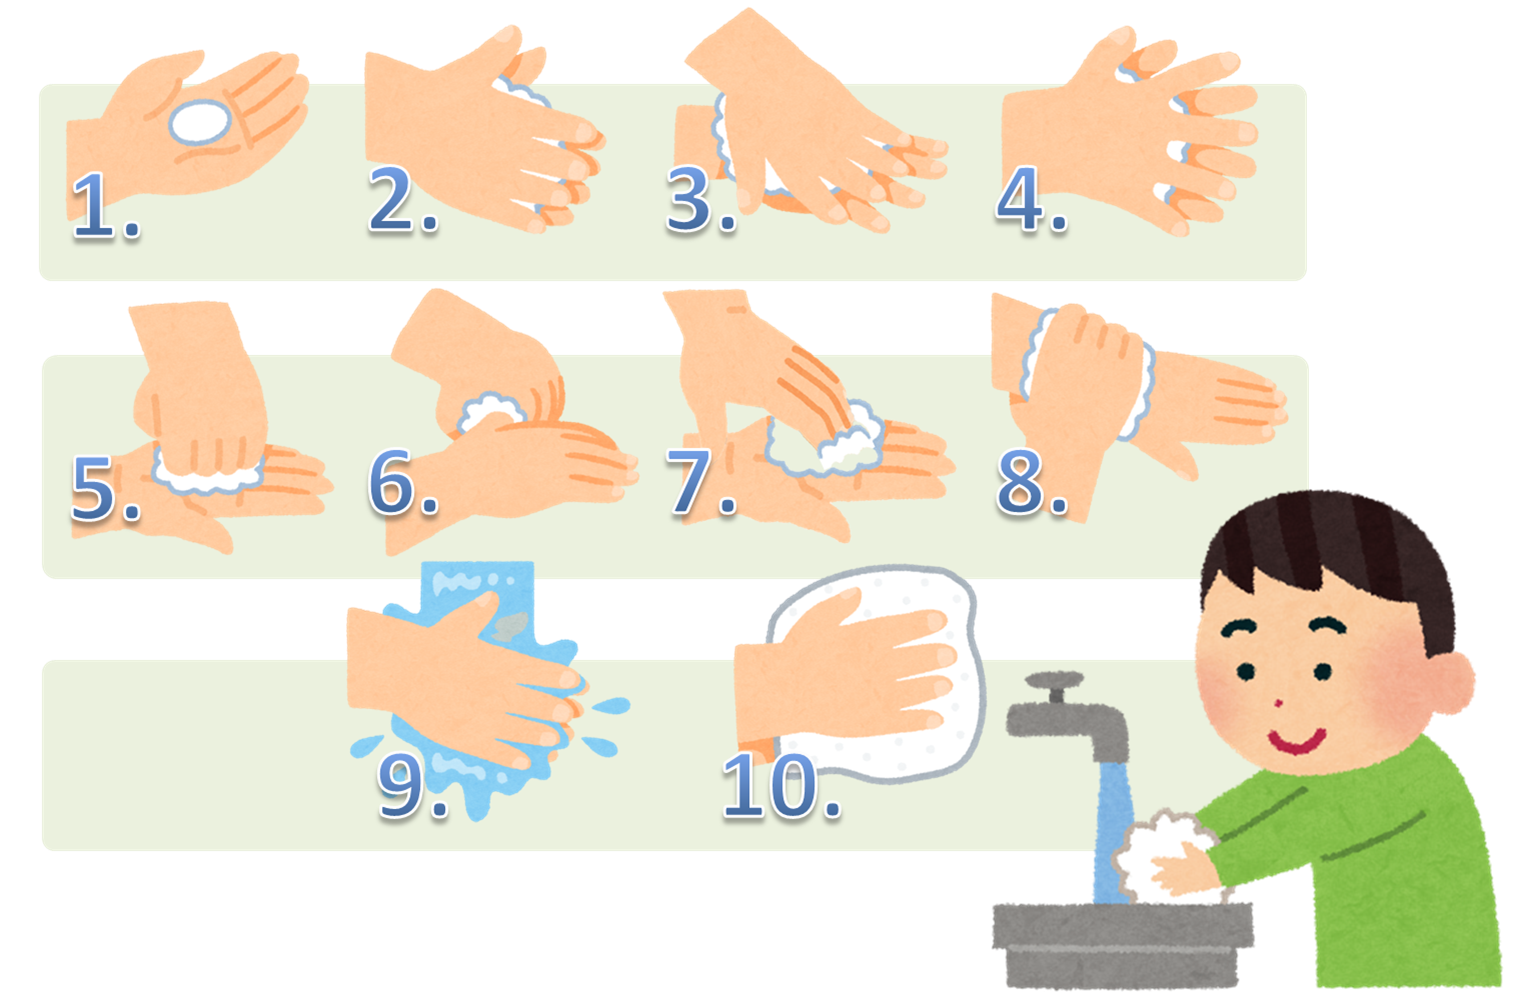 10 Steps to Proper Hand Hygiene.